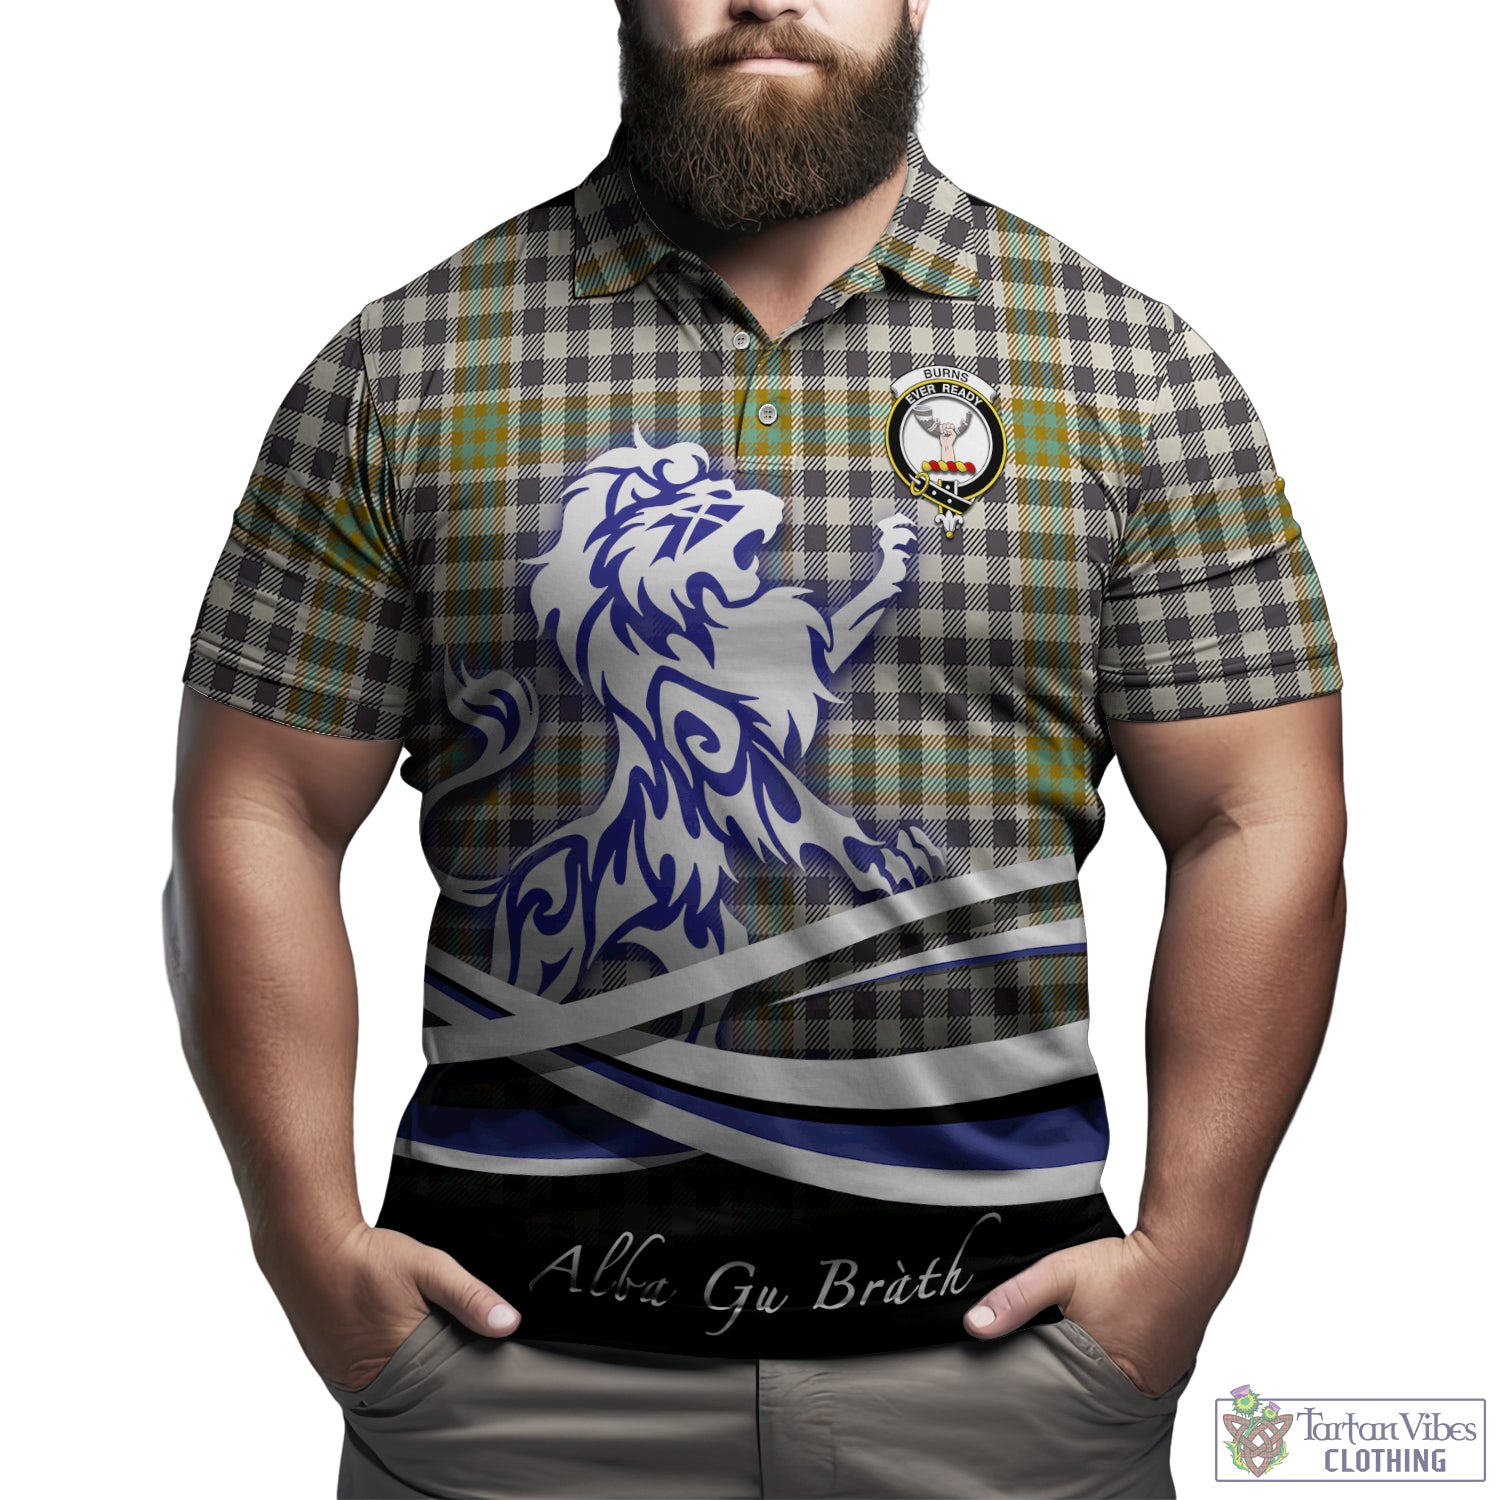 burns-check-tartan-polo-shirt-with-alba-gu-brath-regal-lion-emblem